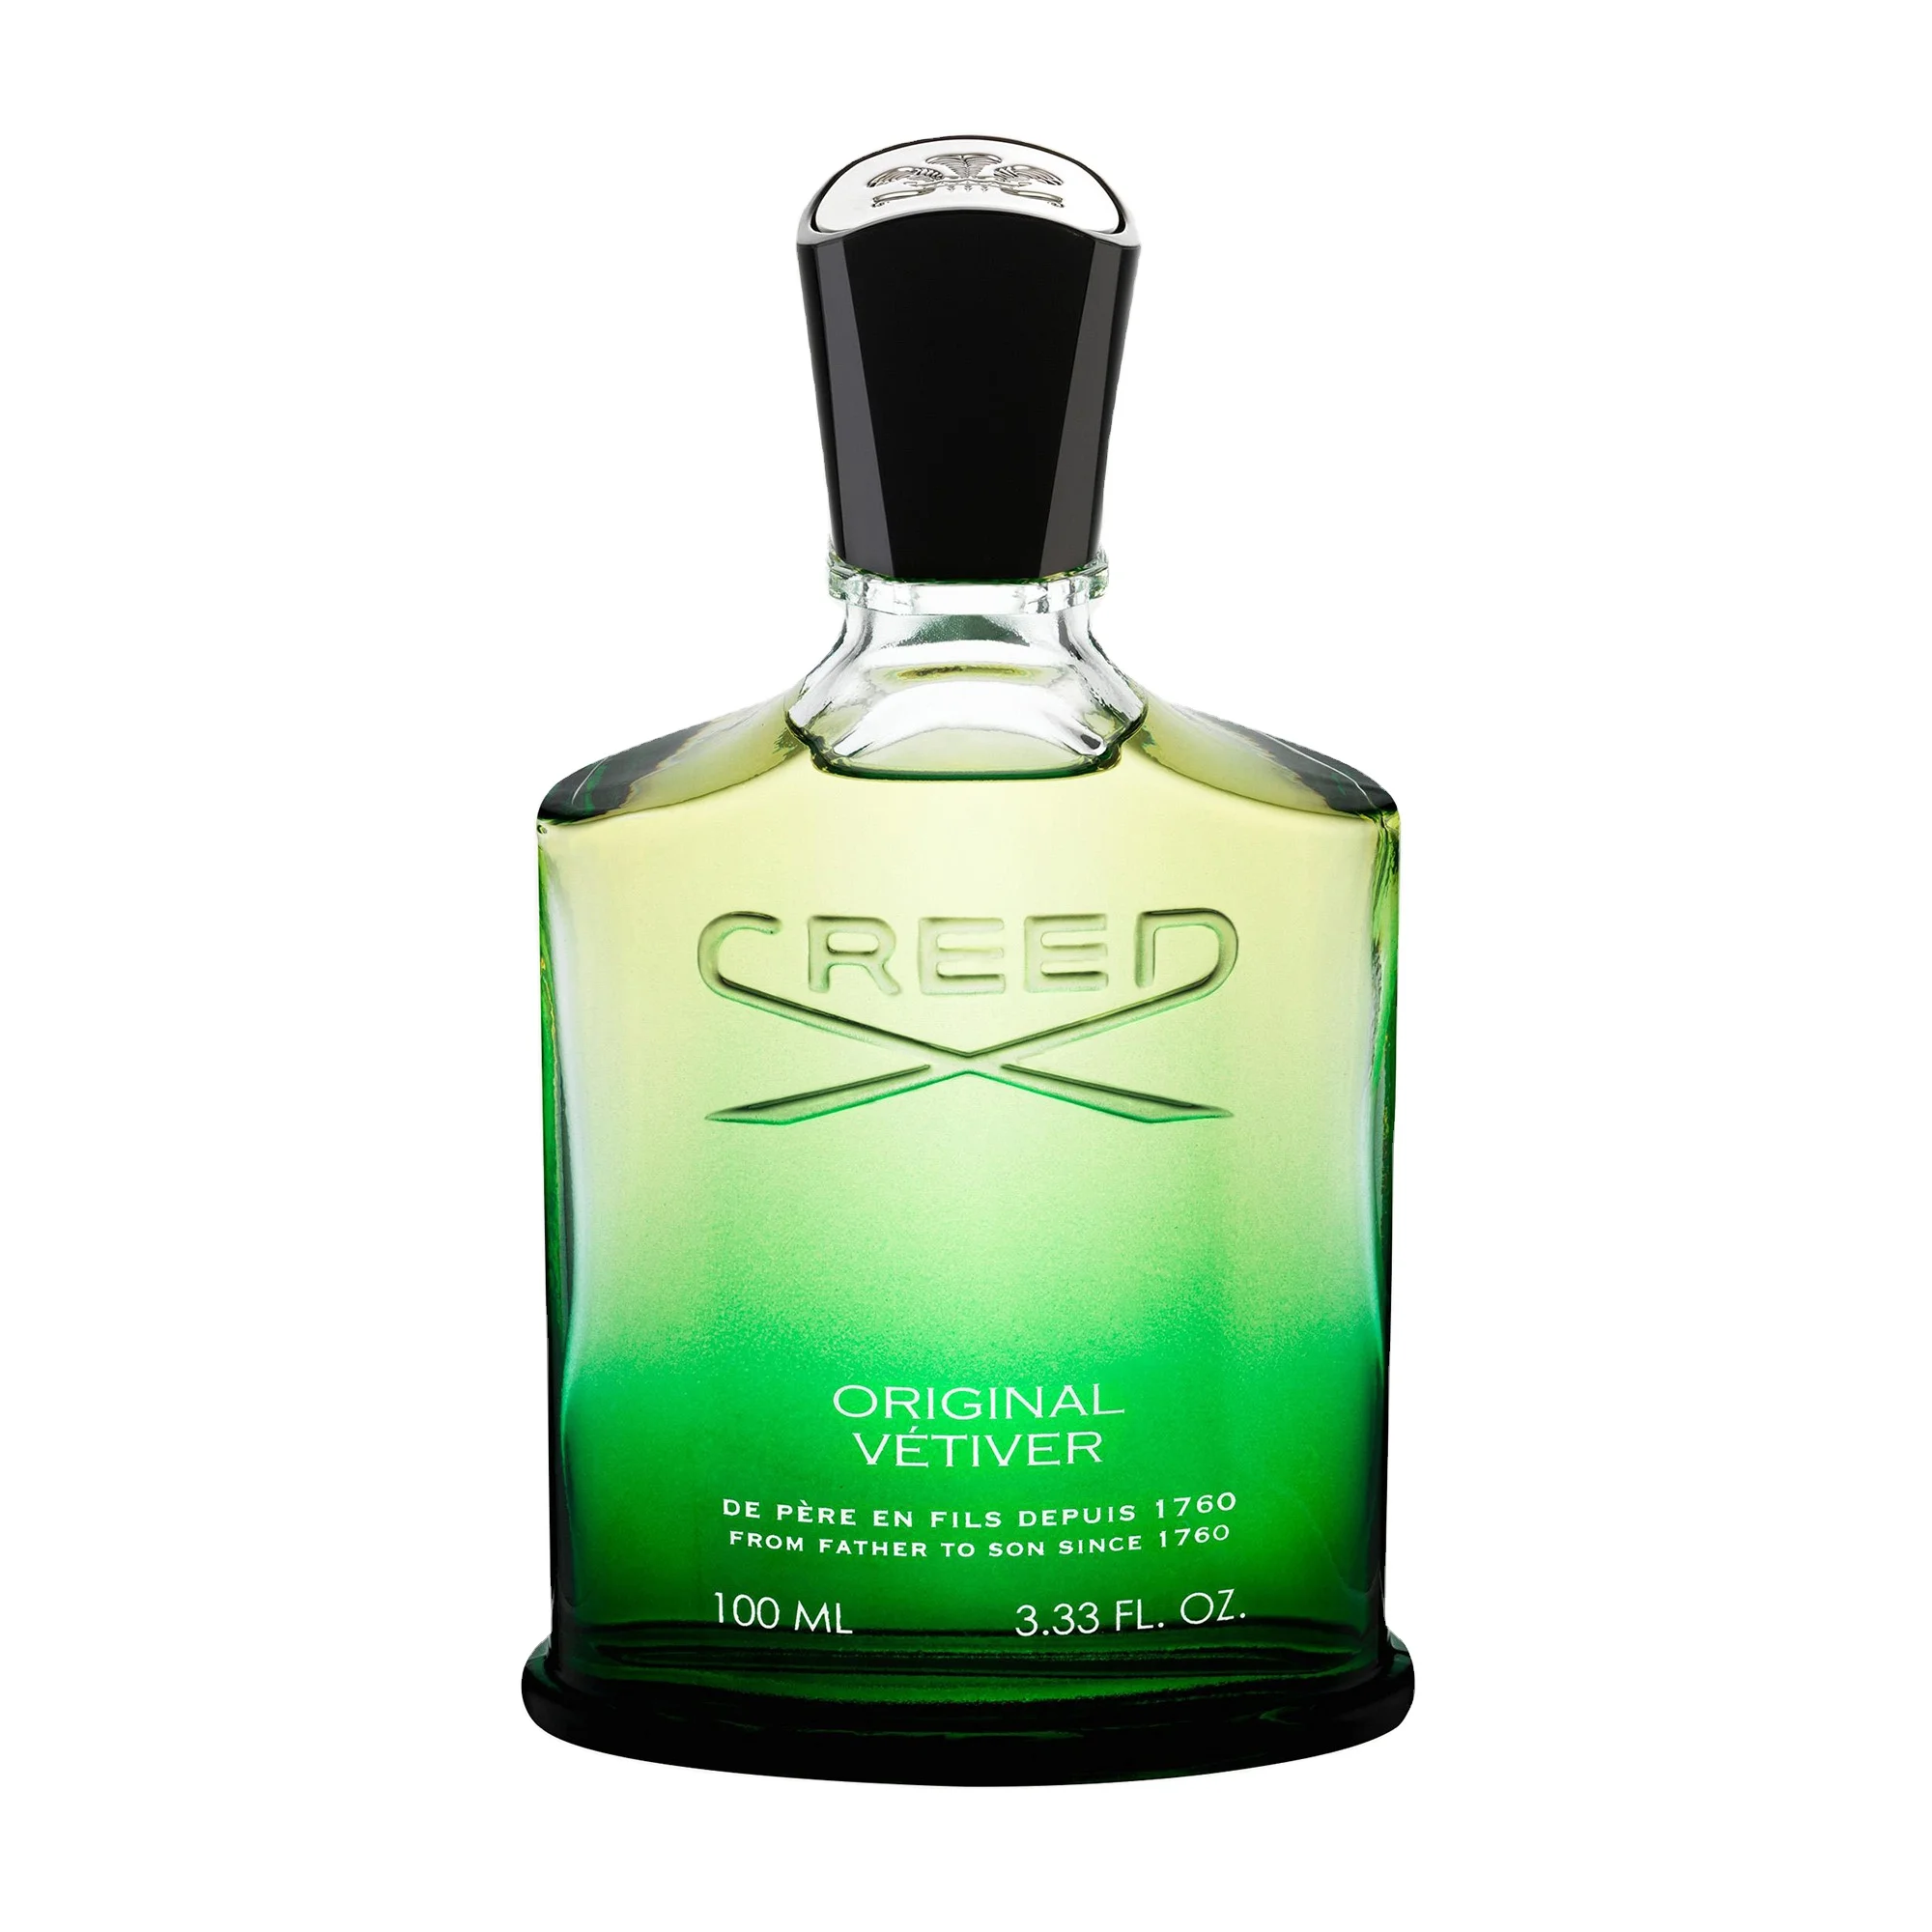 

Creed Perfume Original Santal Eau de Parfum 100ml Fragrance Men Women Long Lasting Good Smell Perfume Spray High Quality Brand, Green